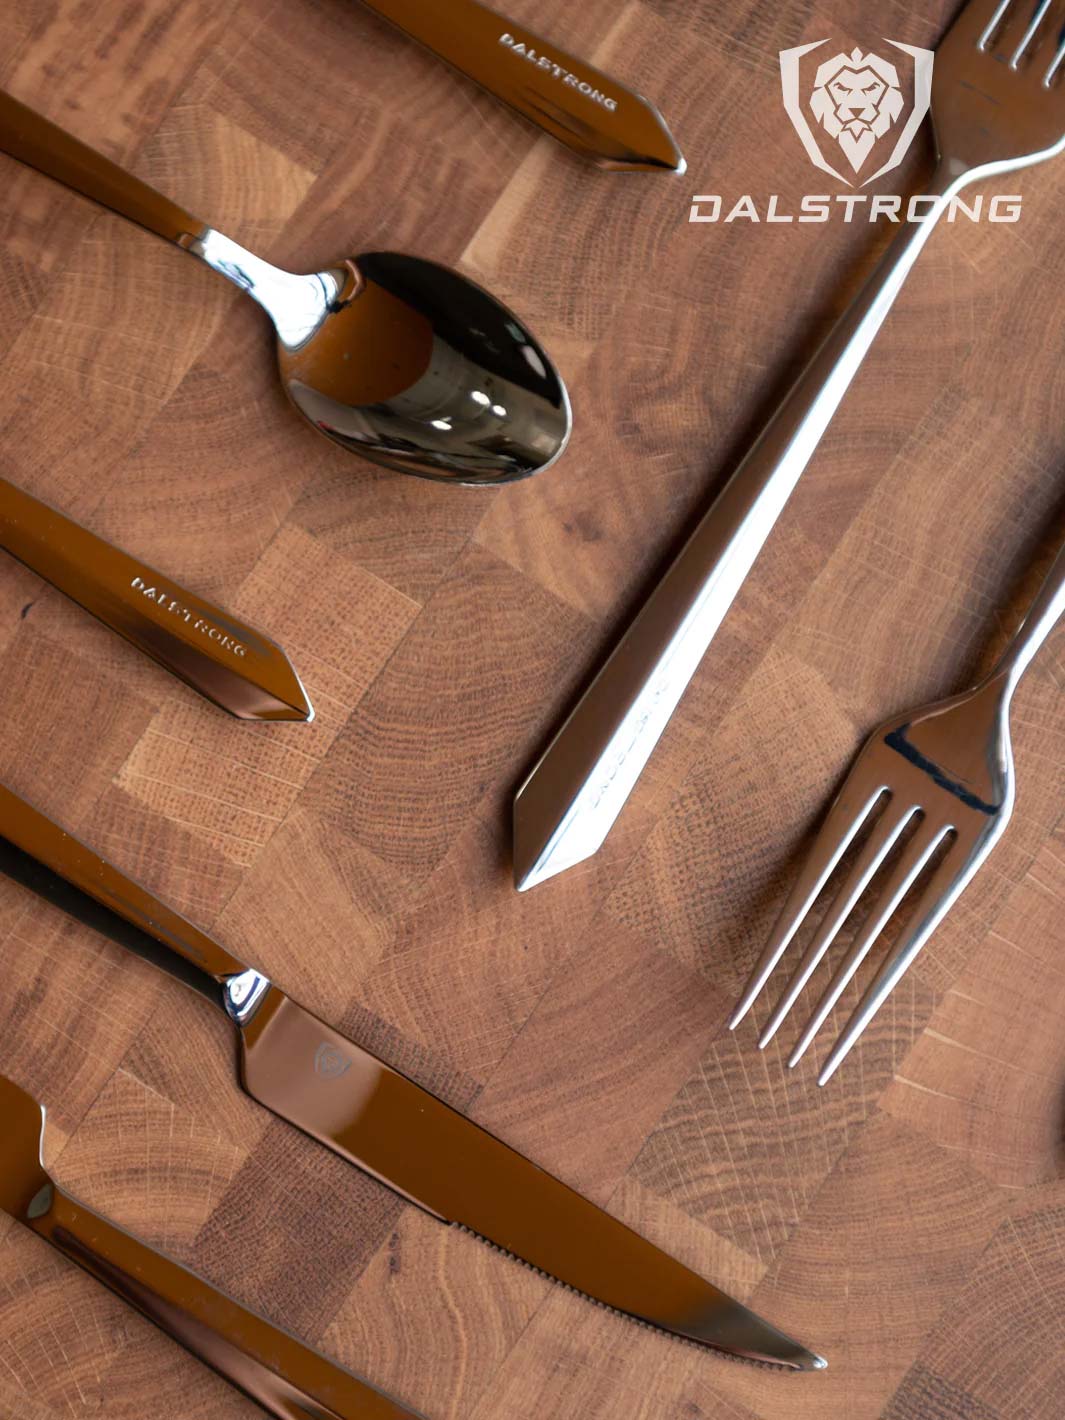 Table 12 50 Piece Flatware Set, Stainless Steel Kitchen Utensils Set - Silver